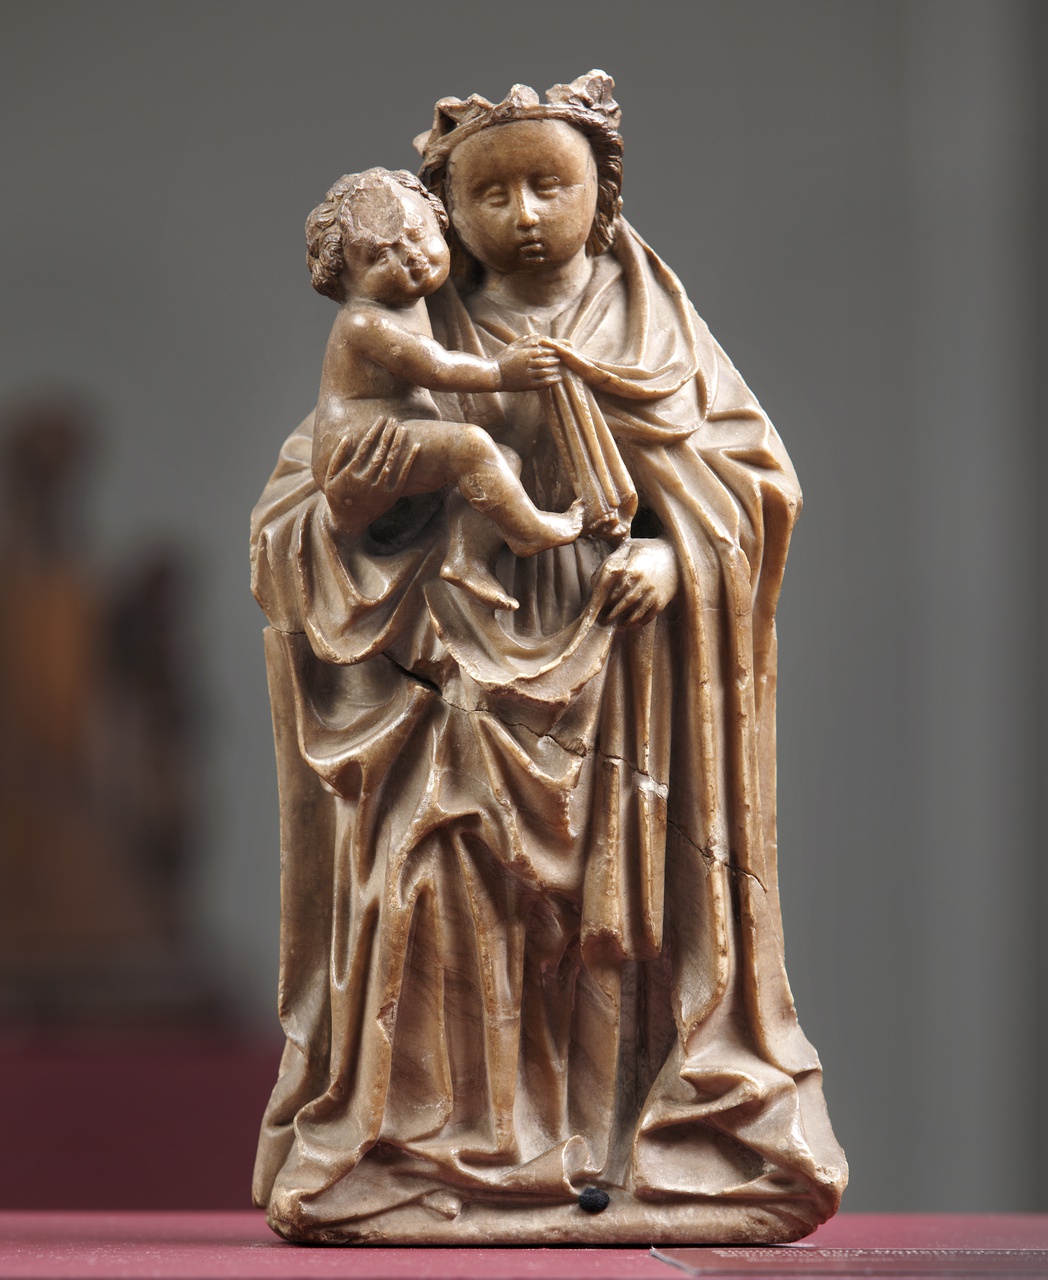 3/5 - Anoniem Zuid-Nederlands, Maria met kind, 1400-1500